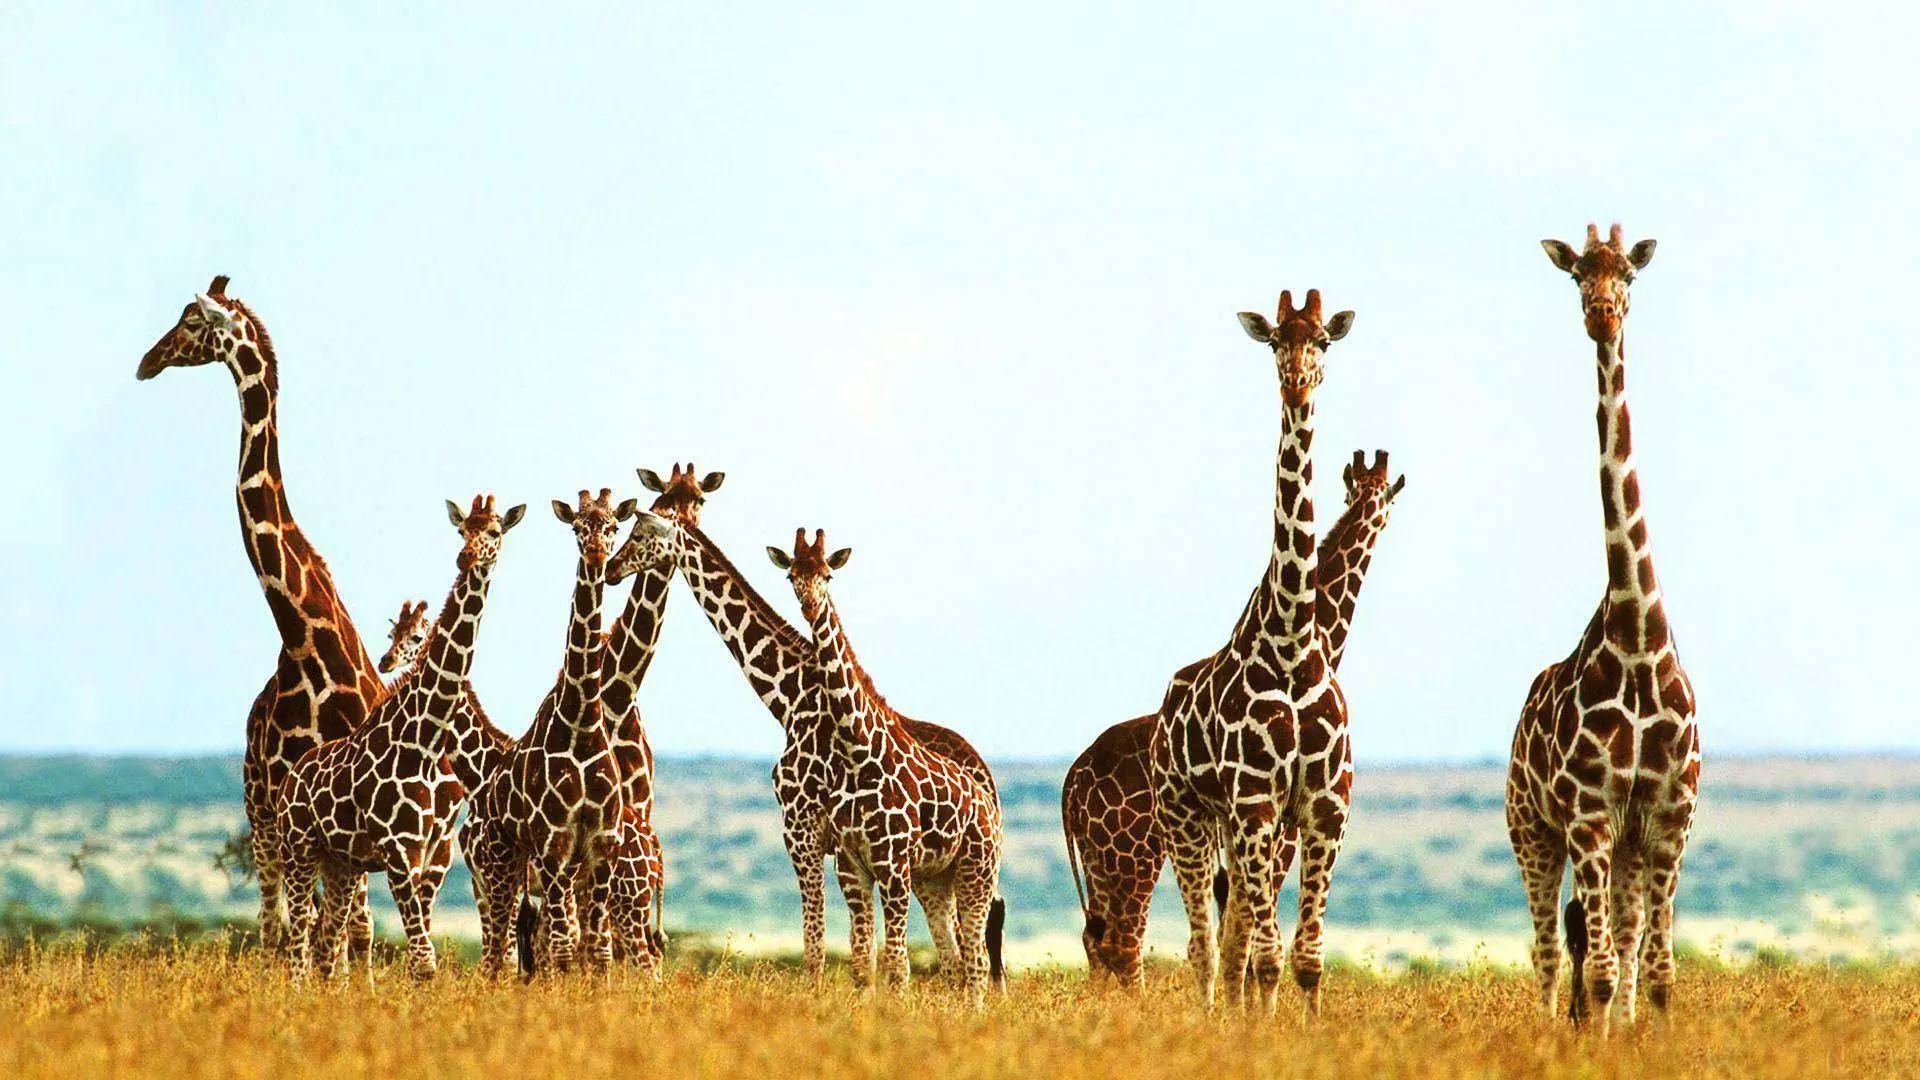  Giraffe Hintergrundbild 1920x1080. Wallpaper Giraffe [DOWNLOAD FREE]